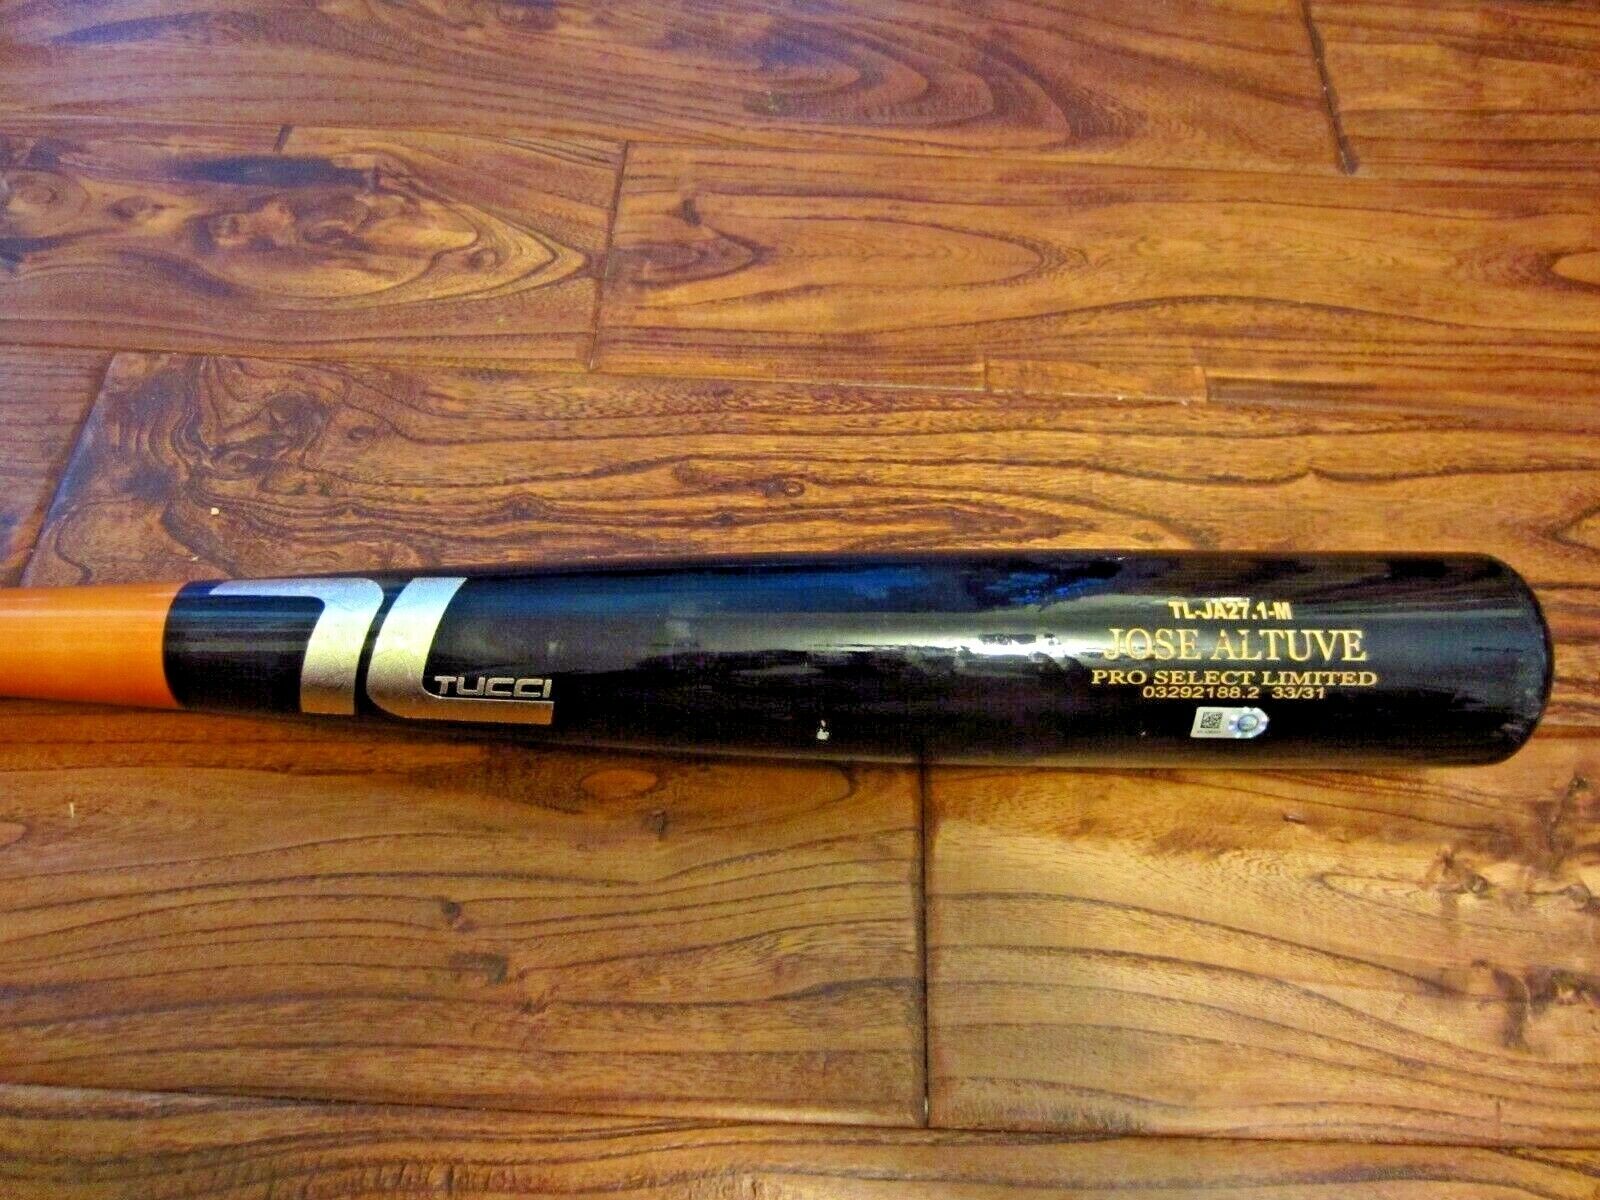 Jose Altuve 2021 Astros Game Used Tucci Bat 8/31/21 vs Mariners MLB Authentic